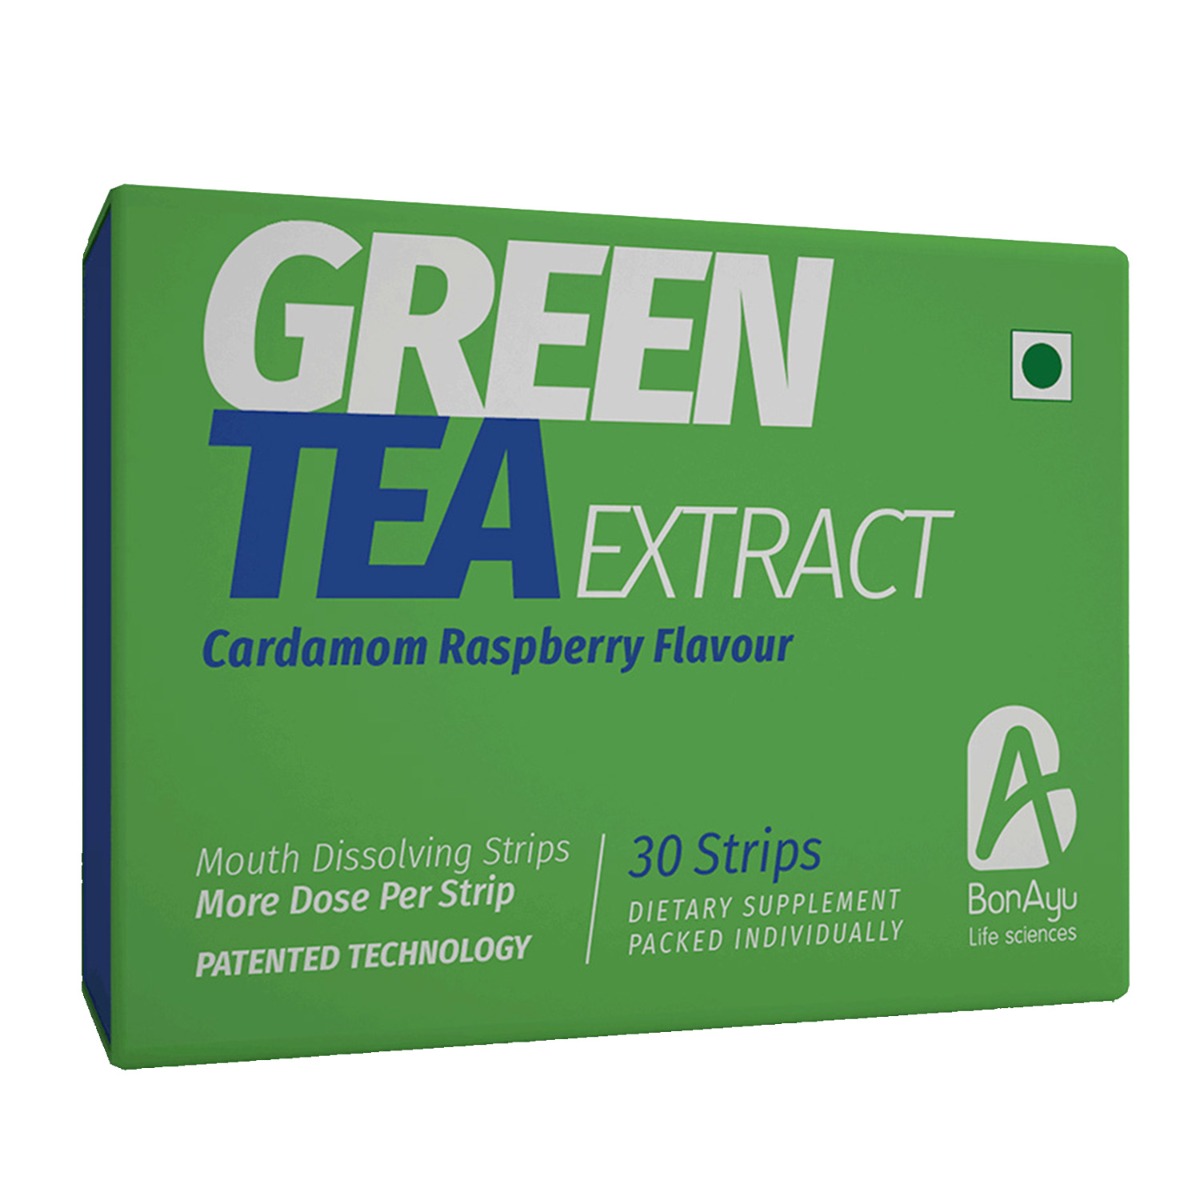 BonAyu Green Tea Extract Cardomom Raspberry Flavour Mouth Dissolving Strips, 30 Strips